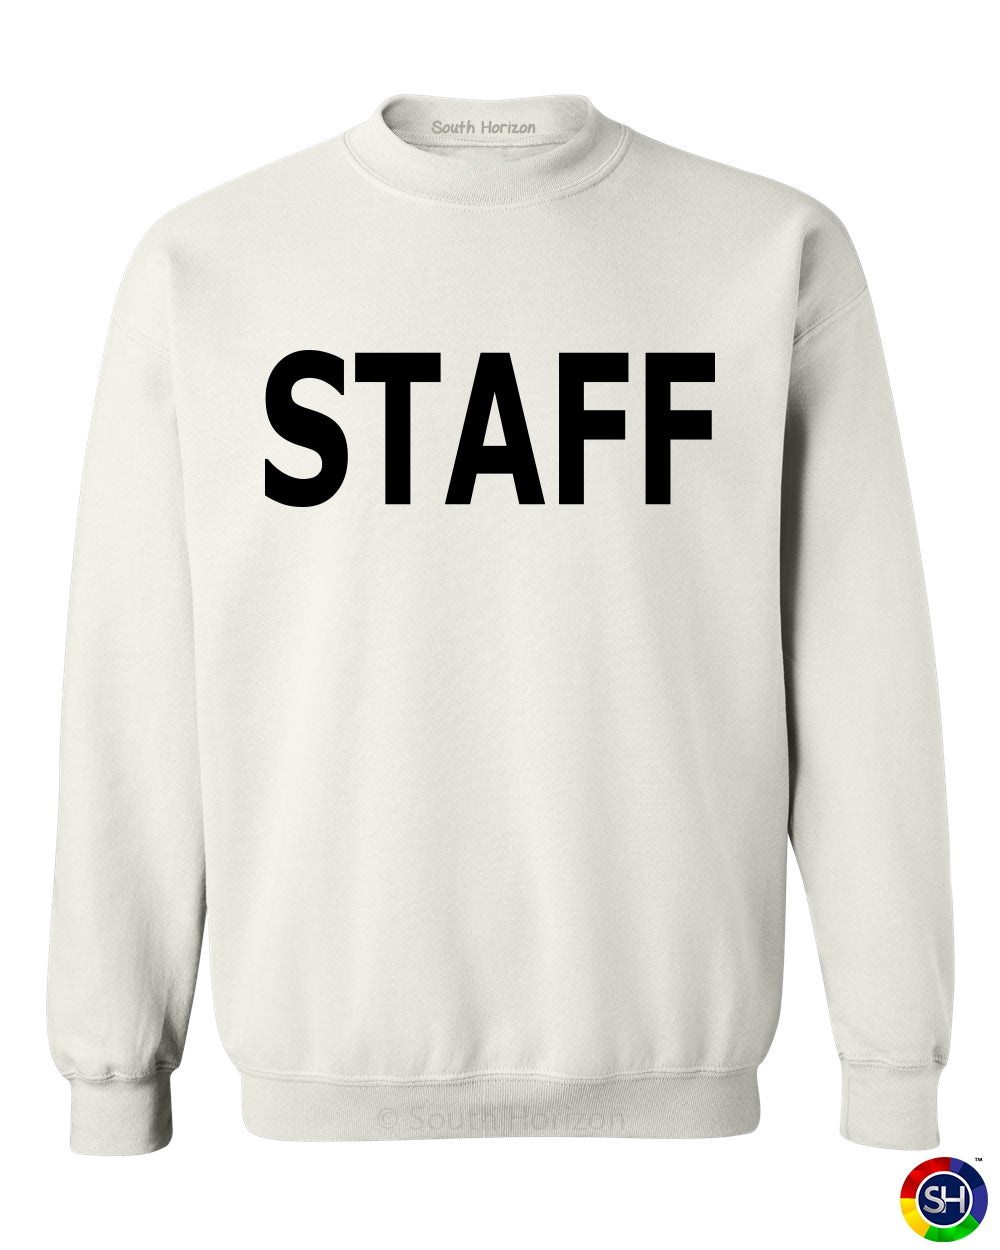 STAFF on SweatShirt (#923-11)